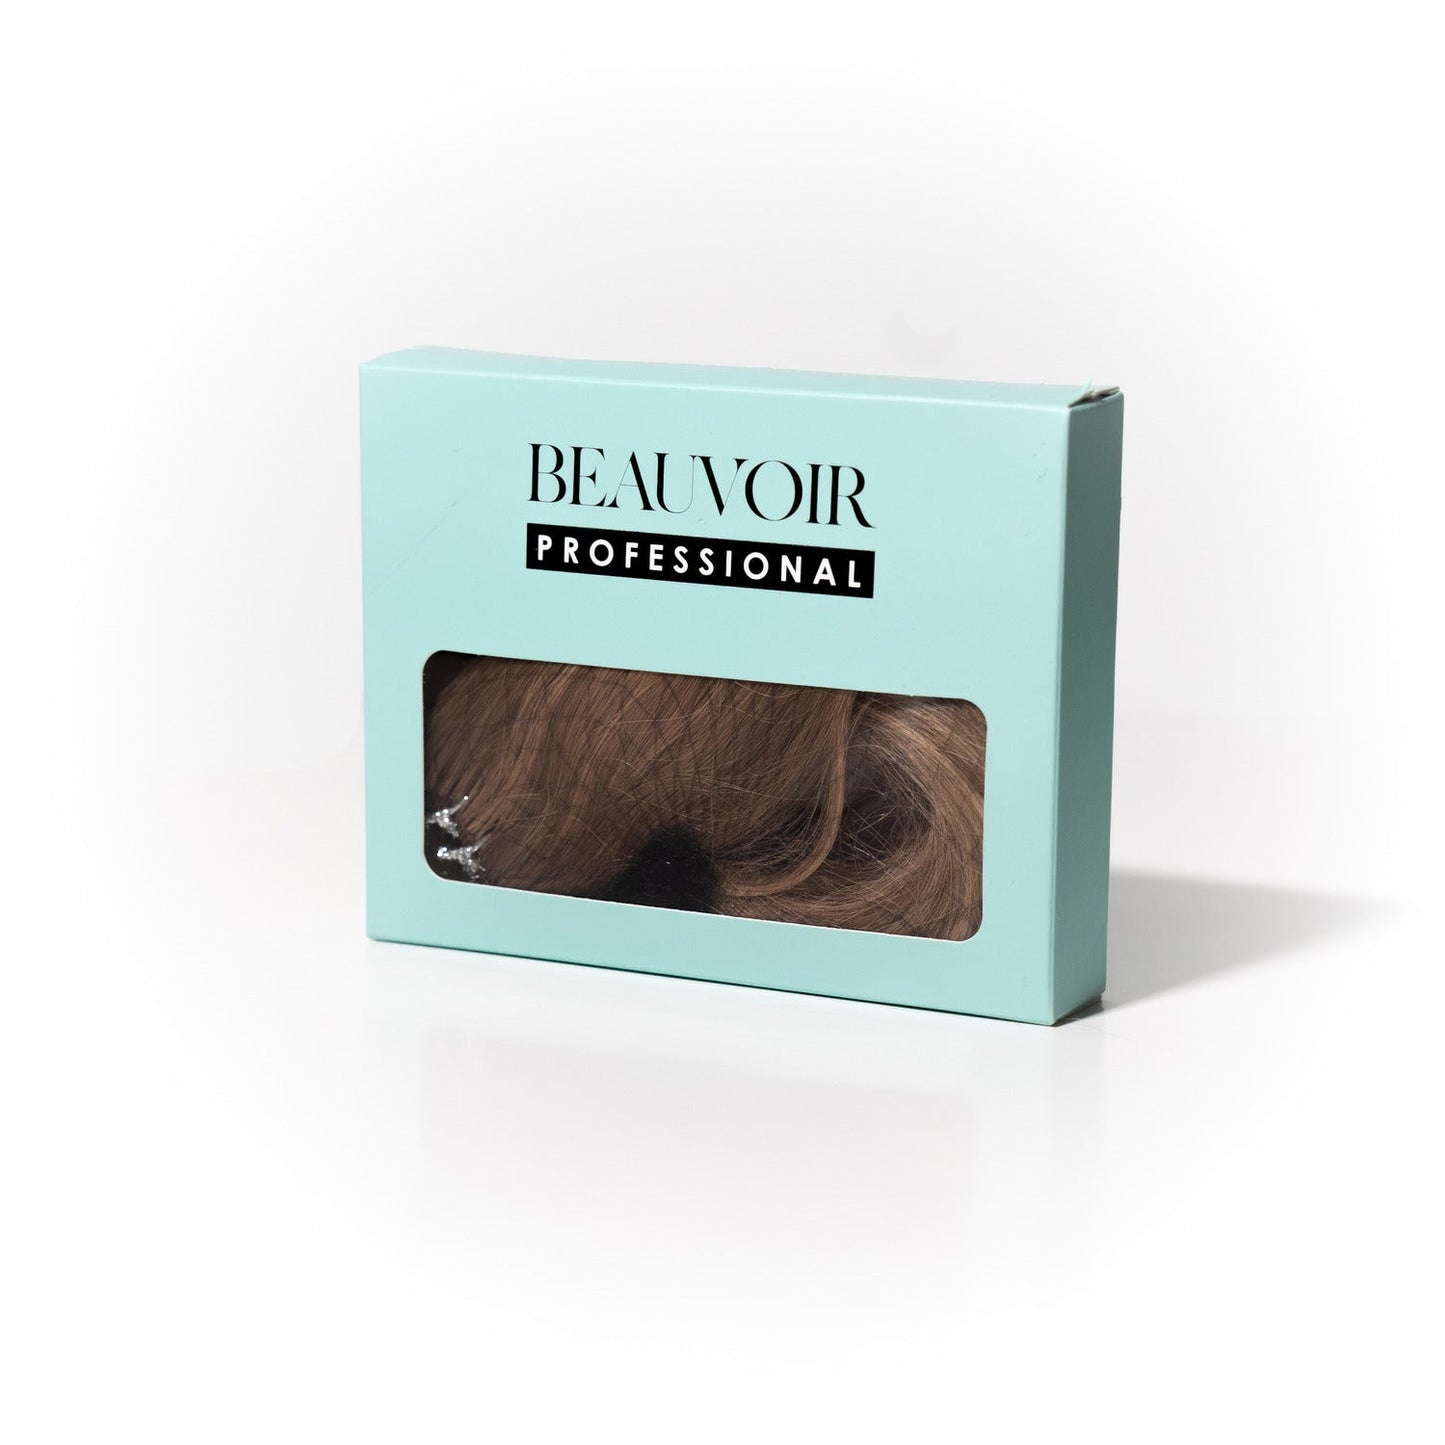 BEAUVOIR Premium Professional Hair Extensions